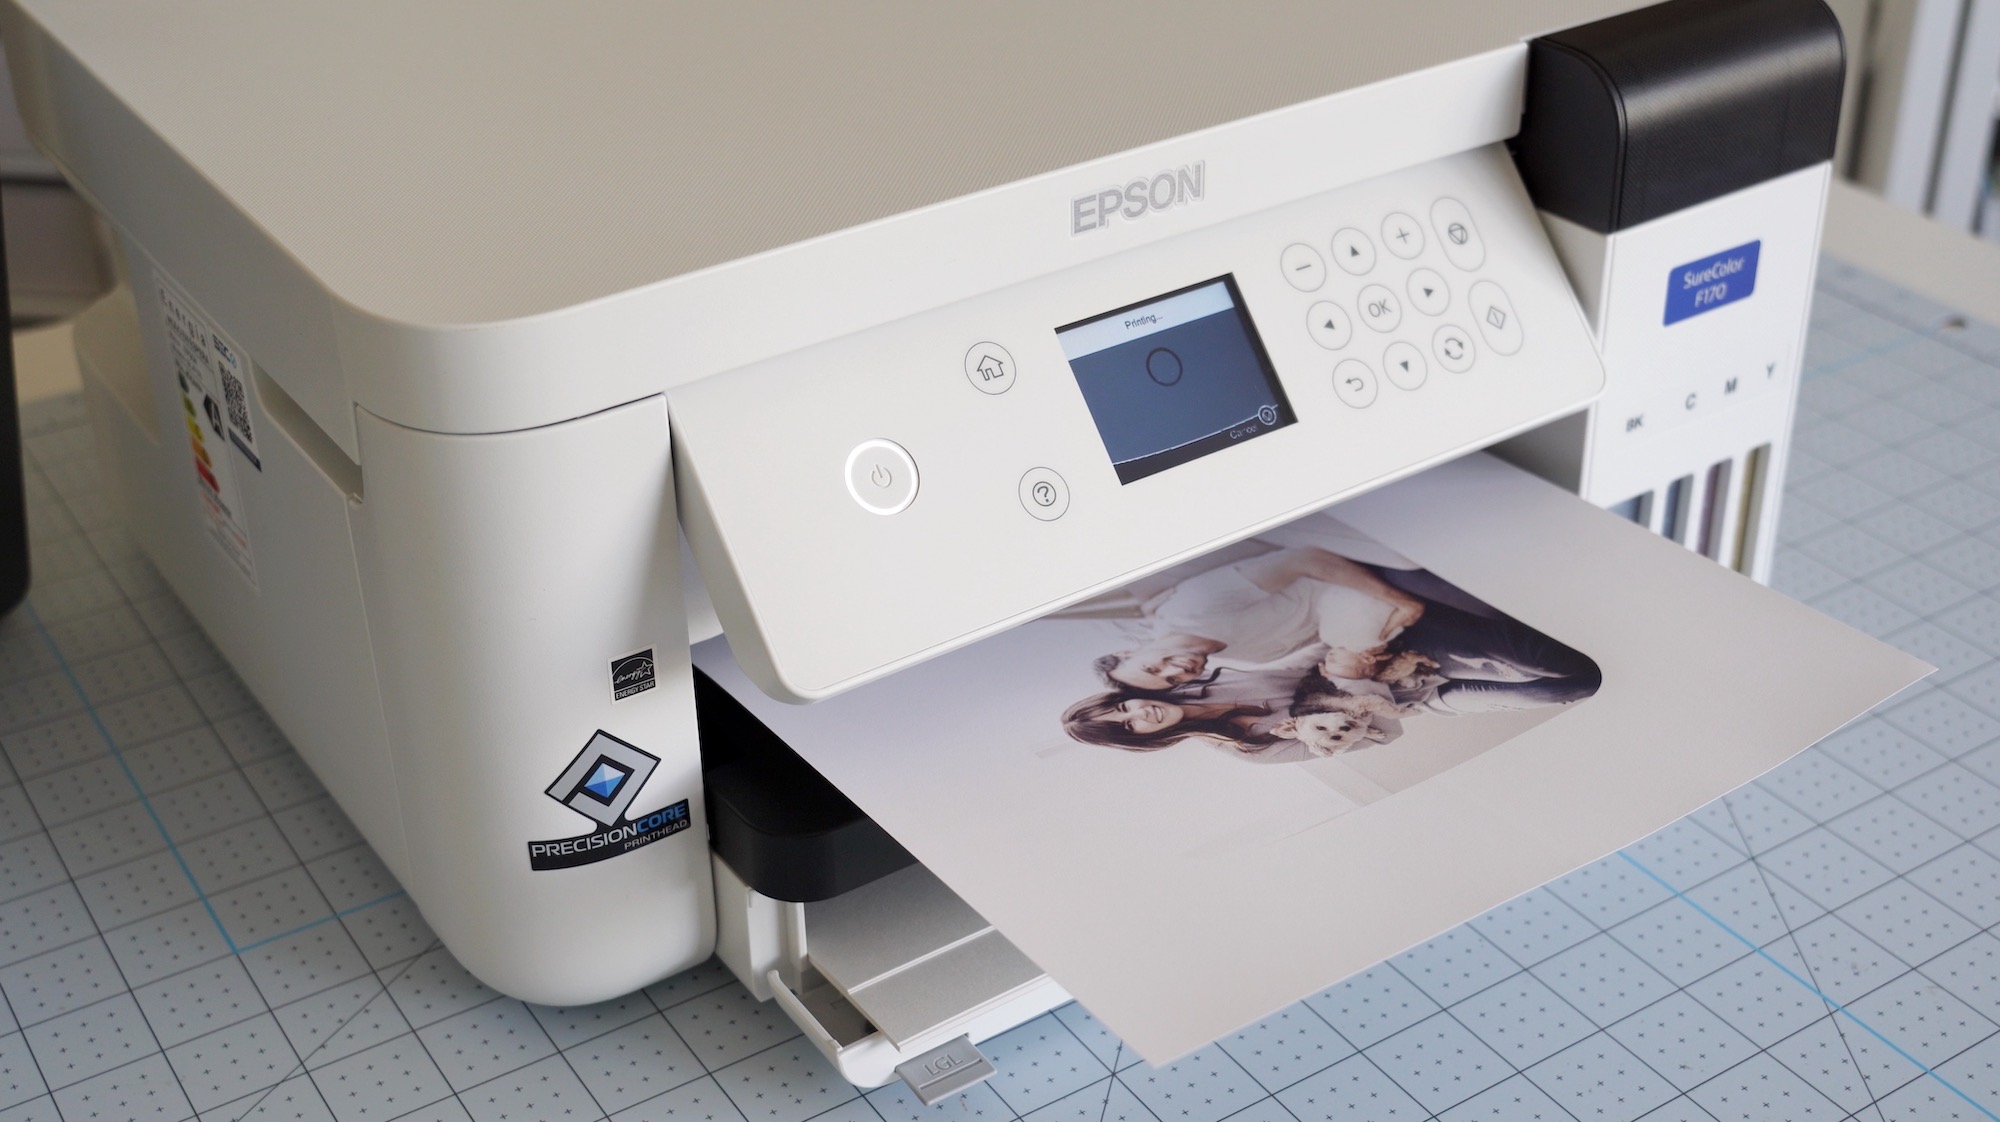 Epson Surecolor F170 Dye Sublimation Printer Setup Review Karley Hall 6136